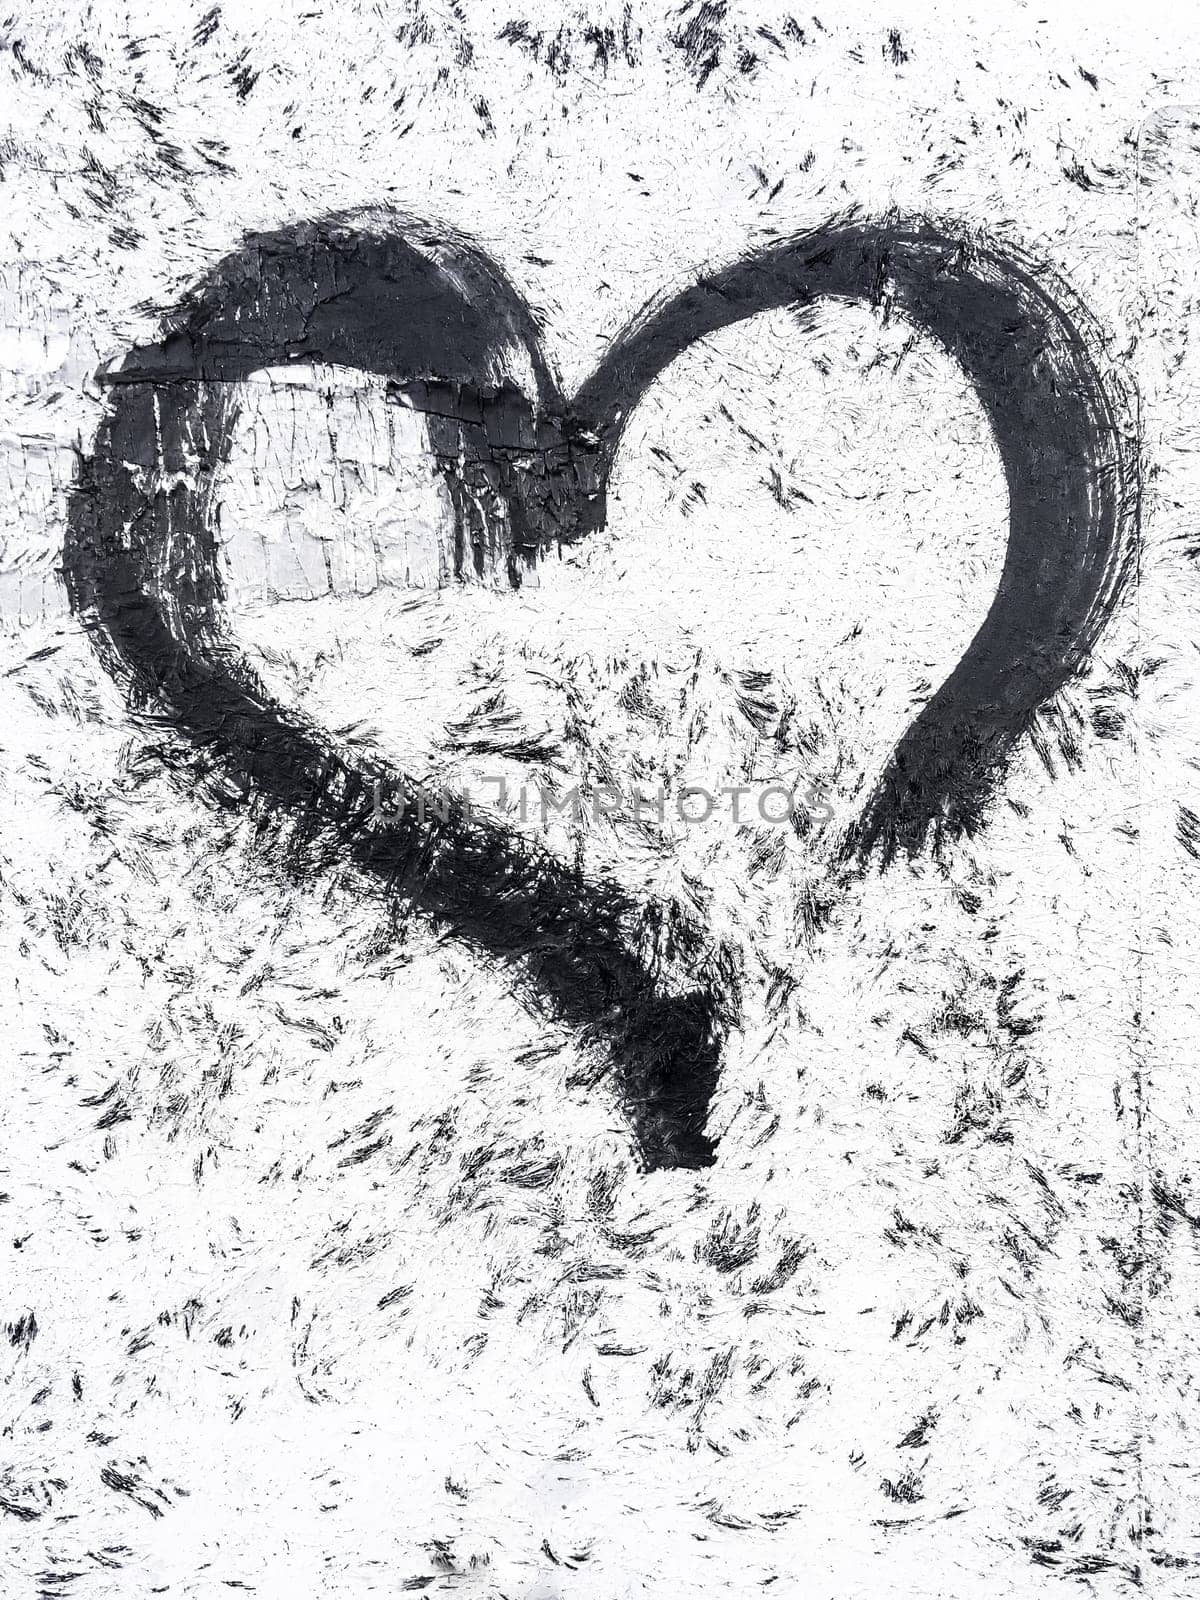 Black heart on white wall by germanopoli